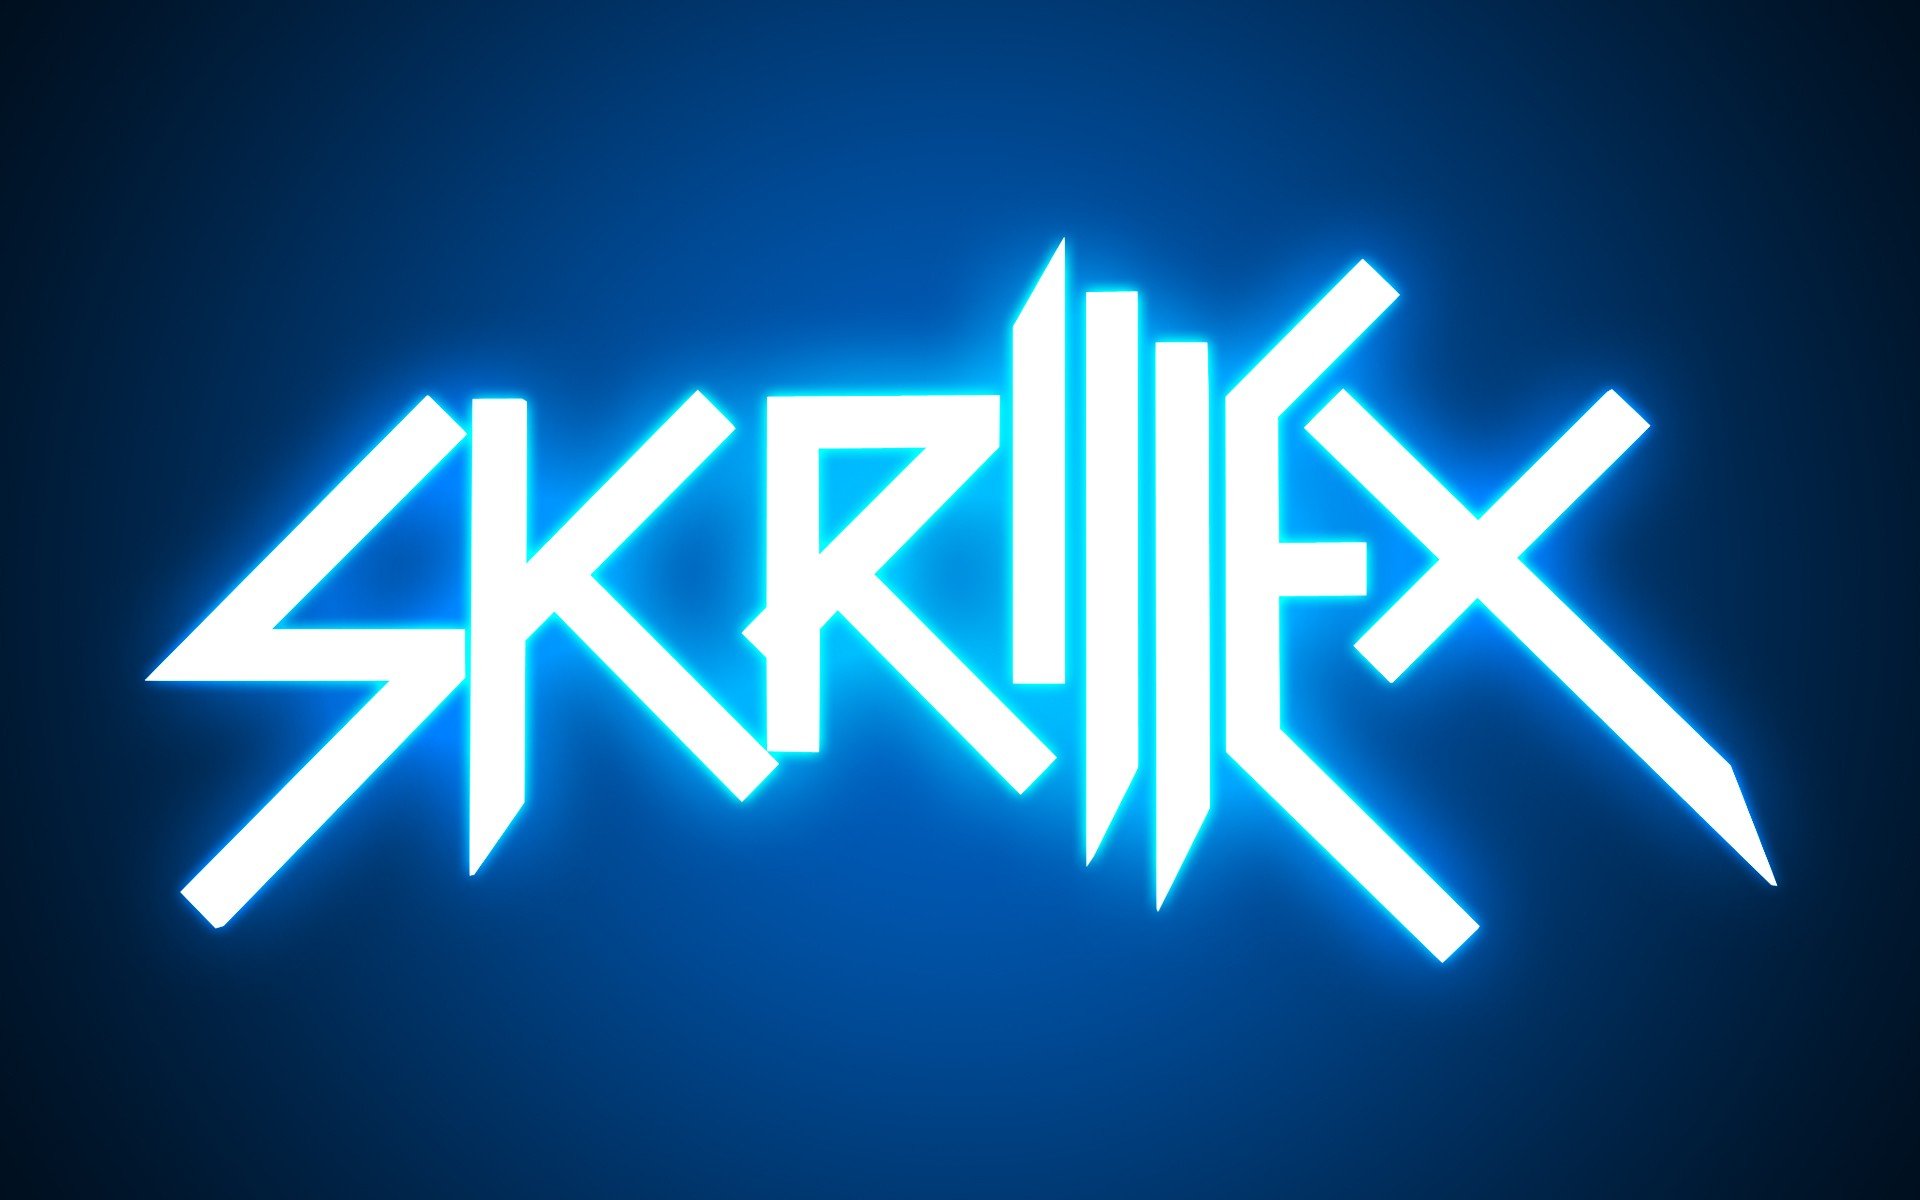 skrillex, Dubstep, Electro, House, Dance, Disco, Electronic, Robot, Cyborg, Poster Wallpaper